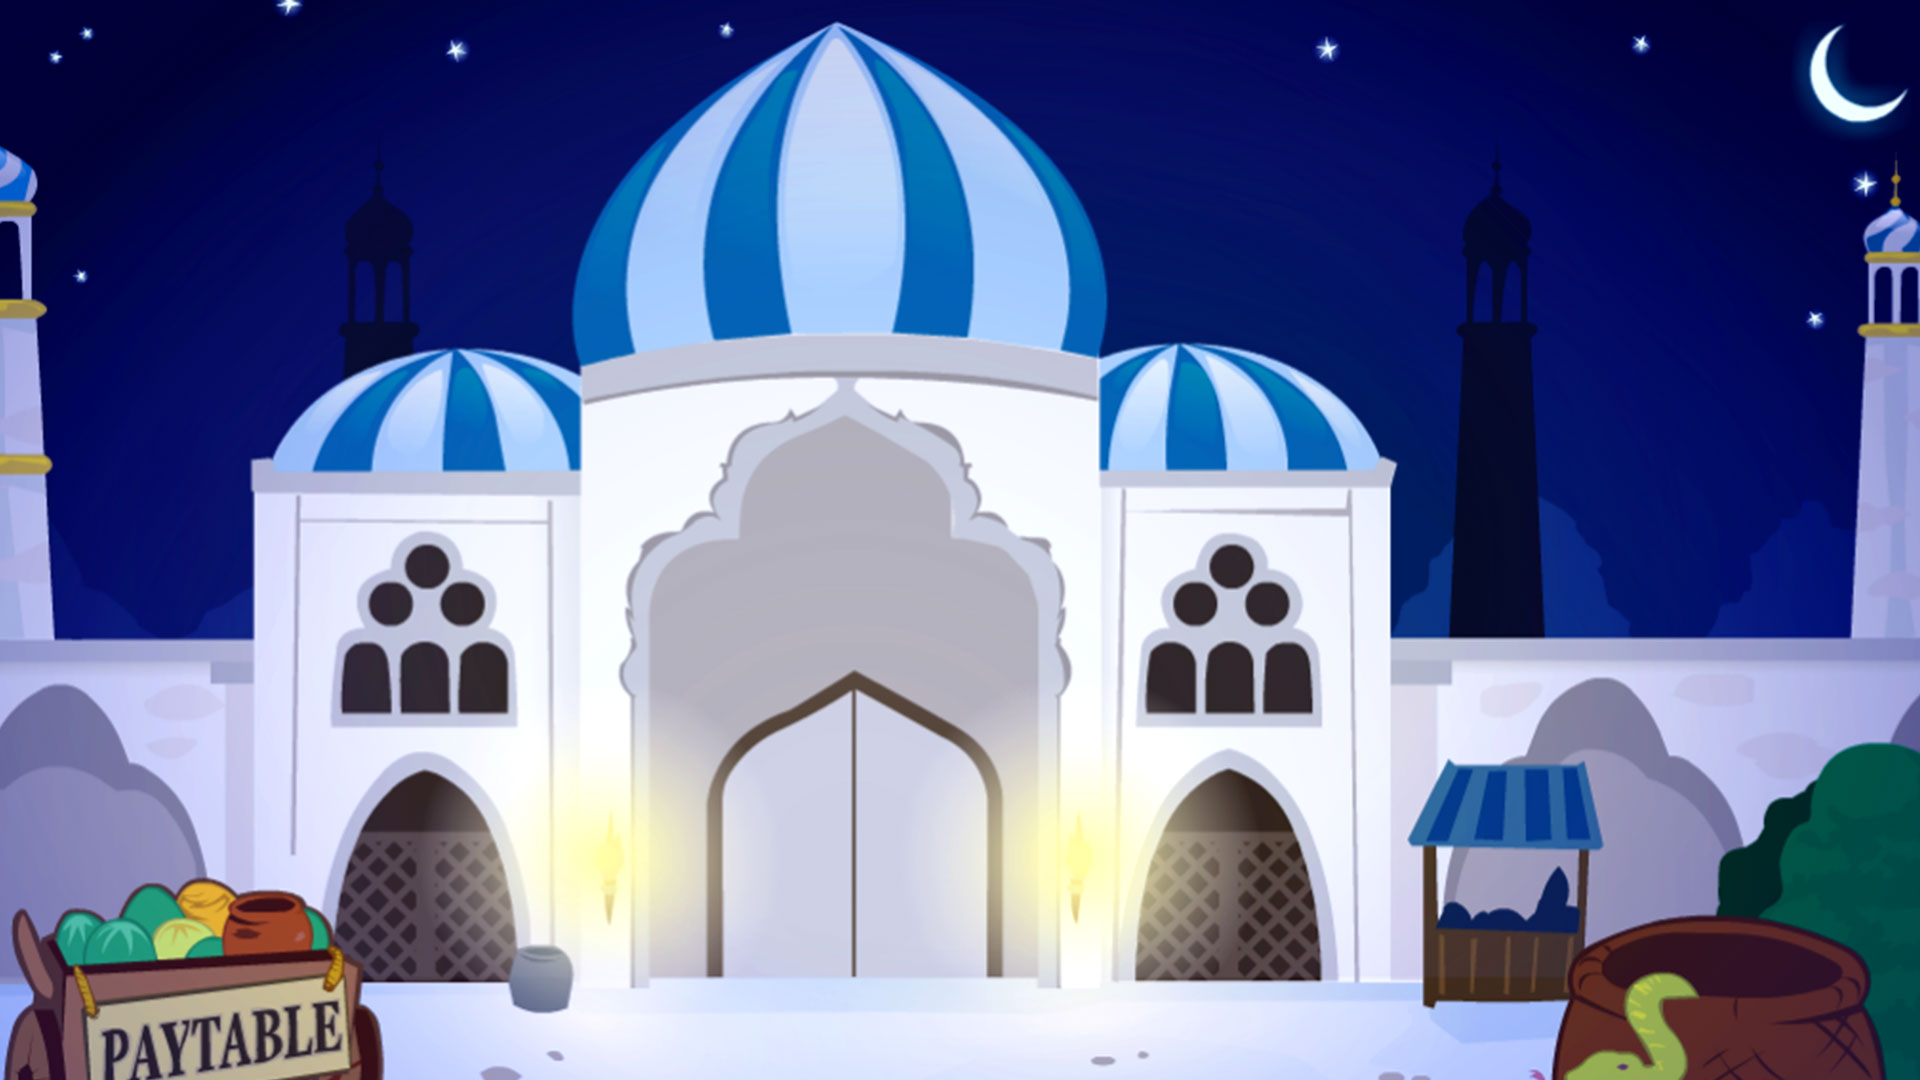 Game hight resolution background Arabian Nights